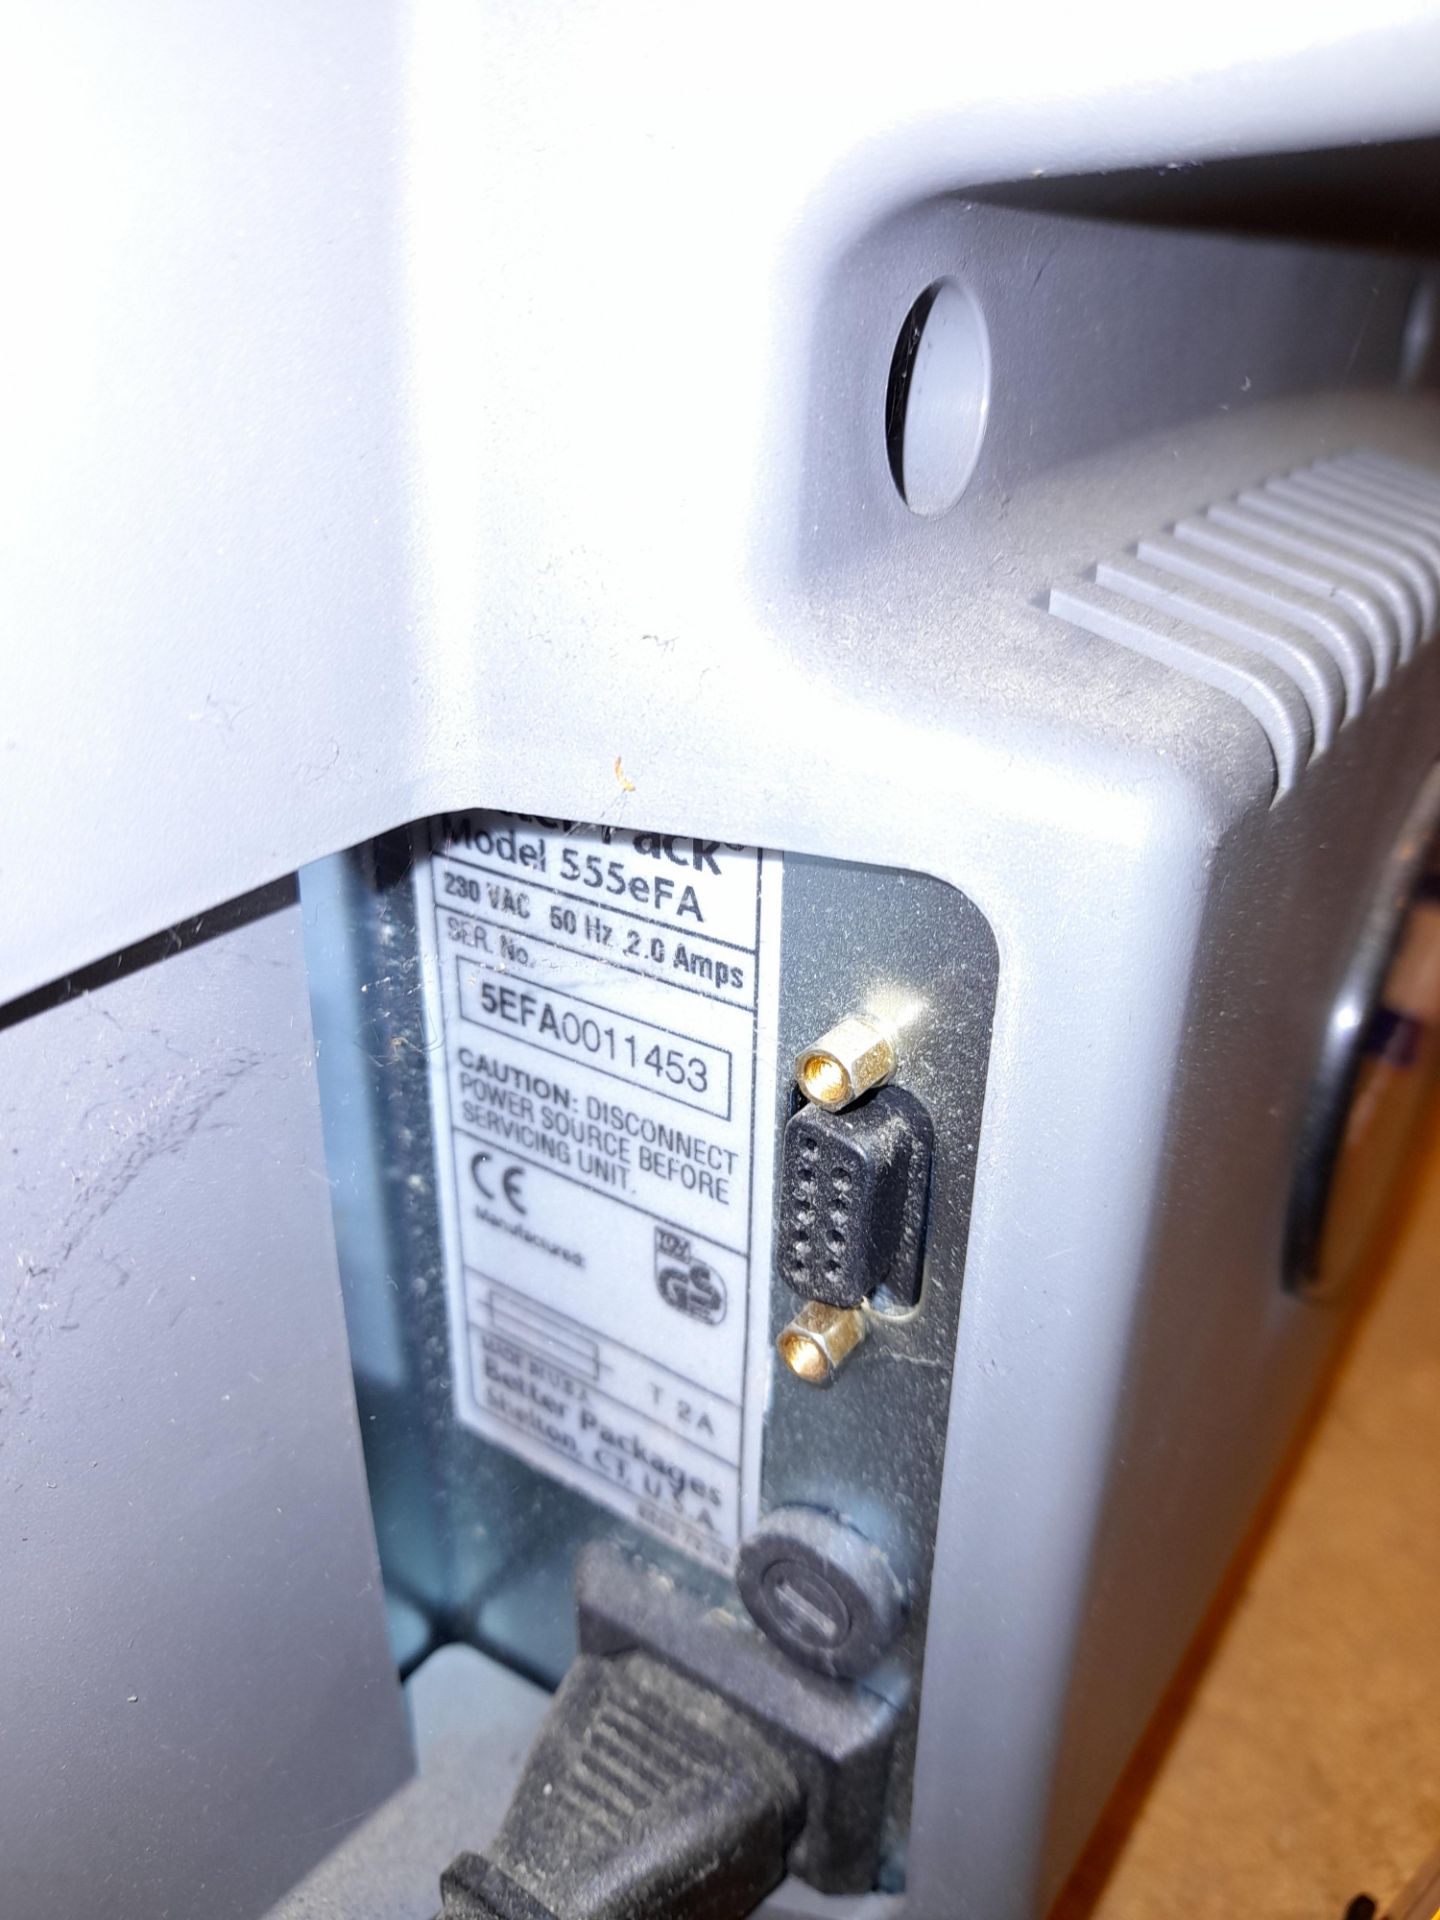 Better Pack 555eFA electric water-activated tape dispenser, Serial Number SEFA0011453 - Image 2 of 2